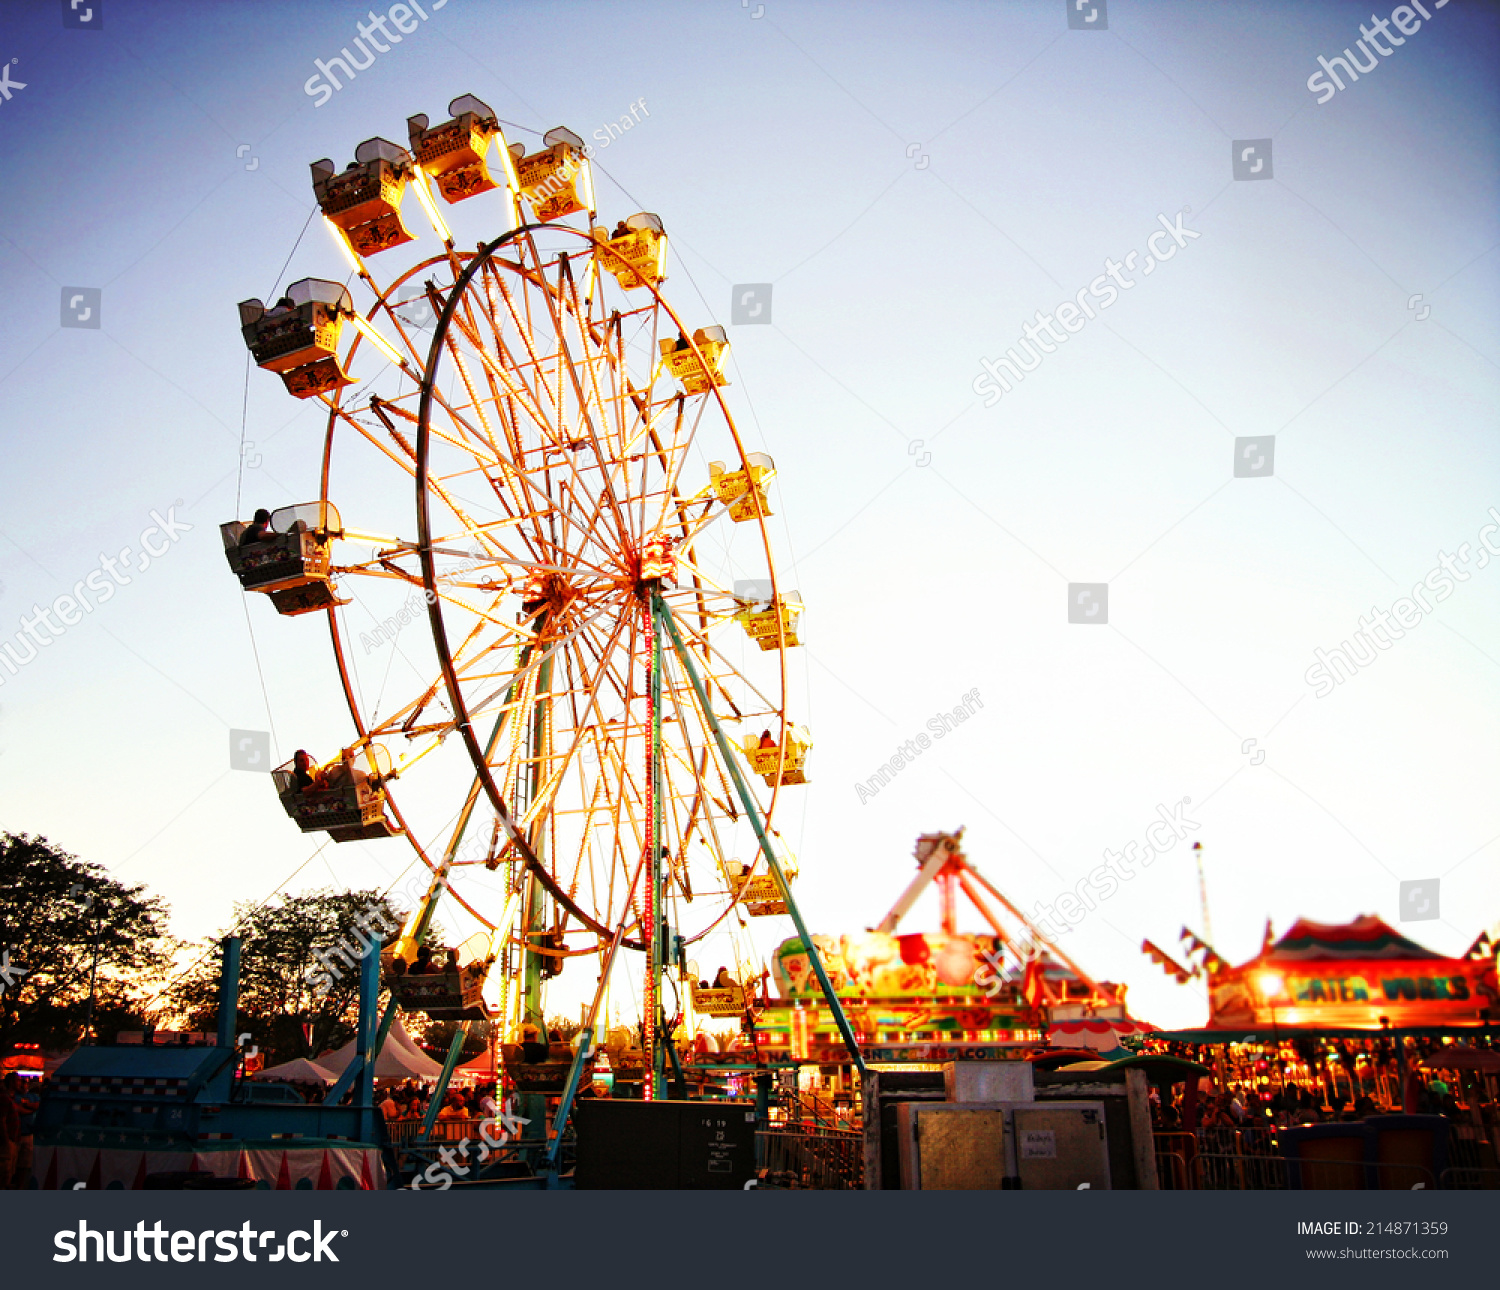 a fair ride during dusk on a warm summer evening #214871359